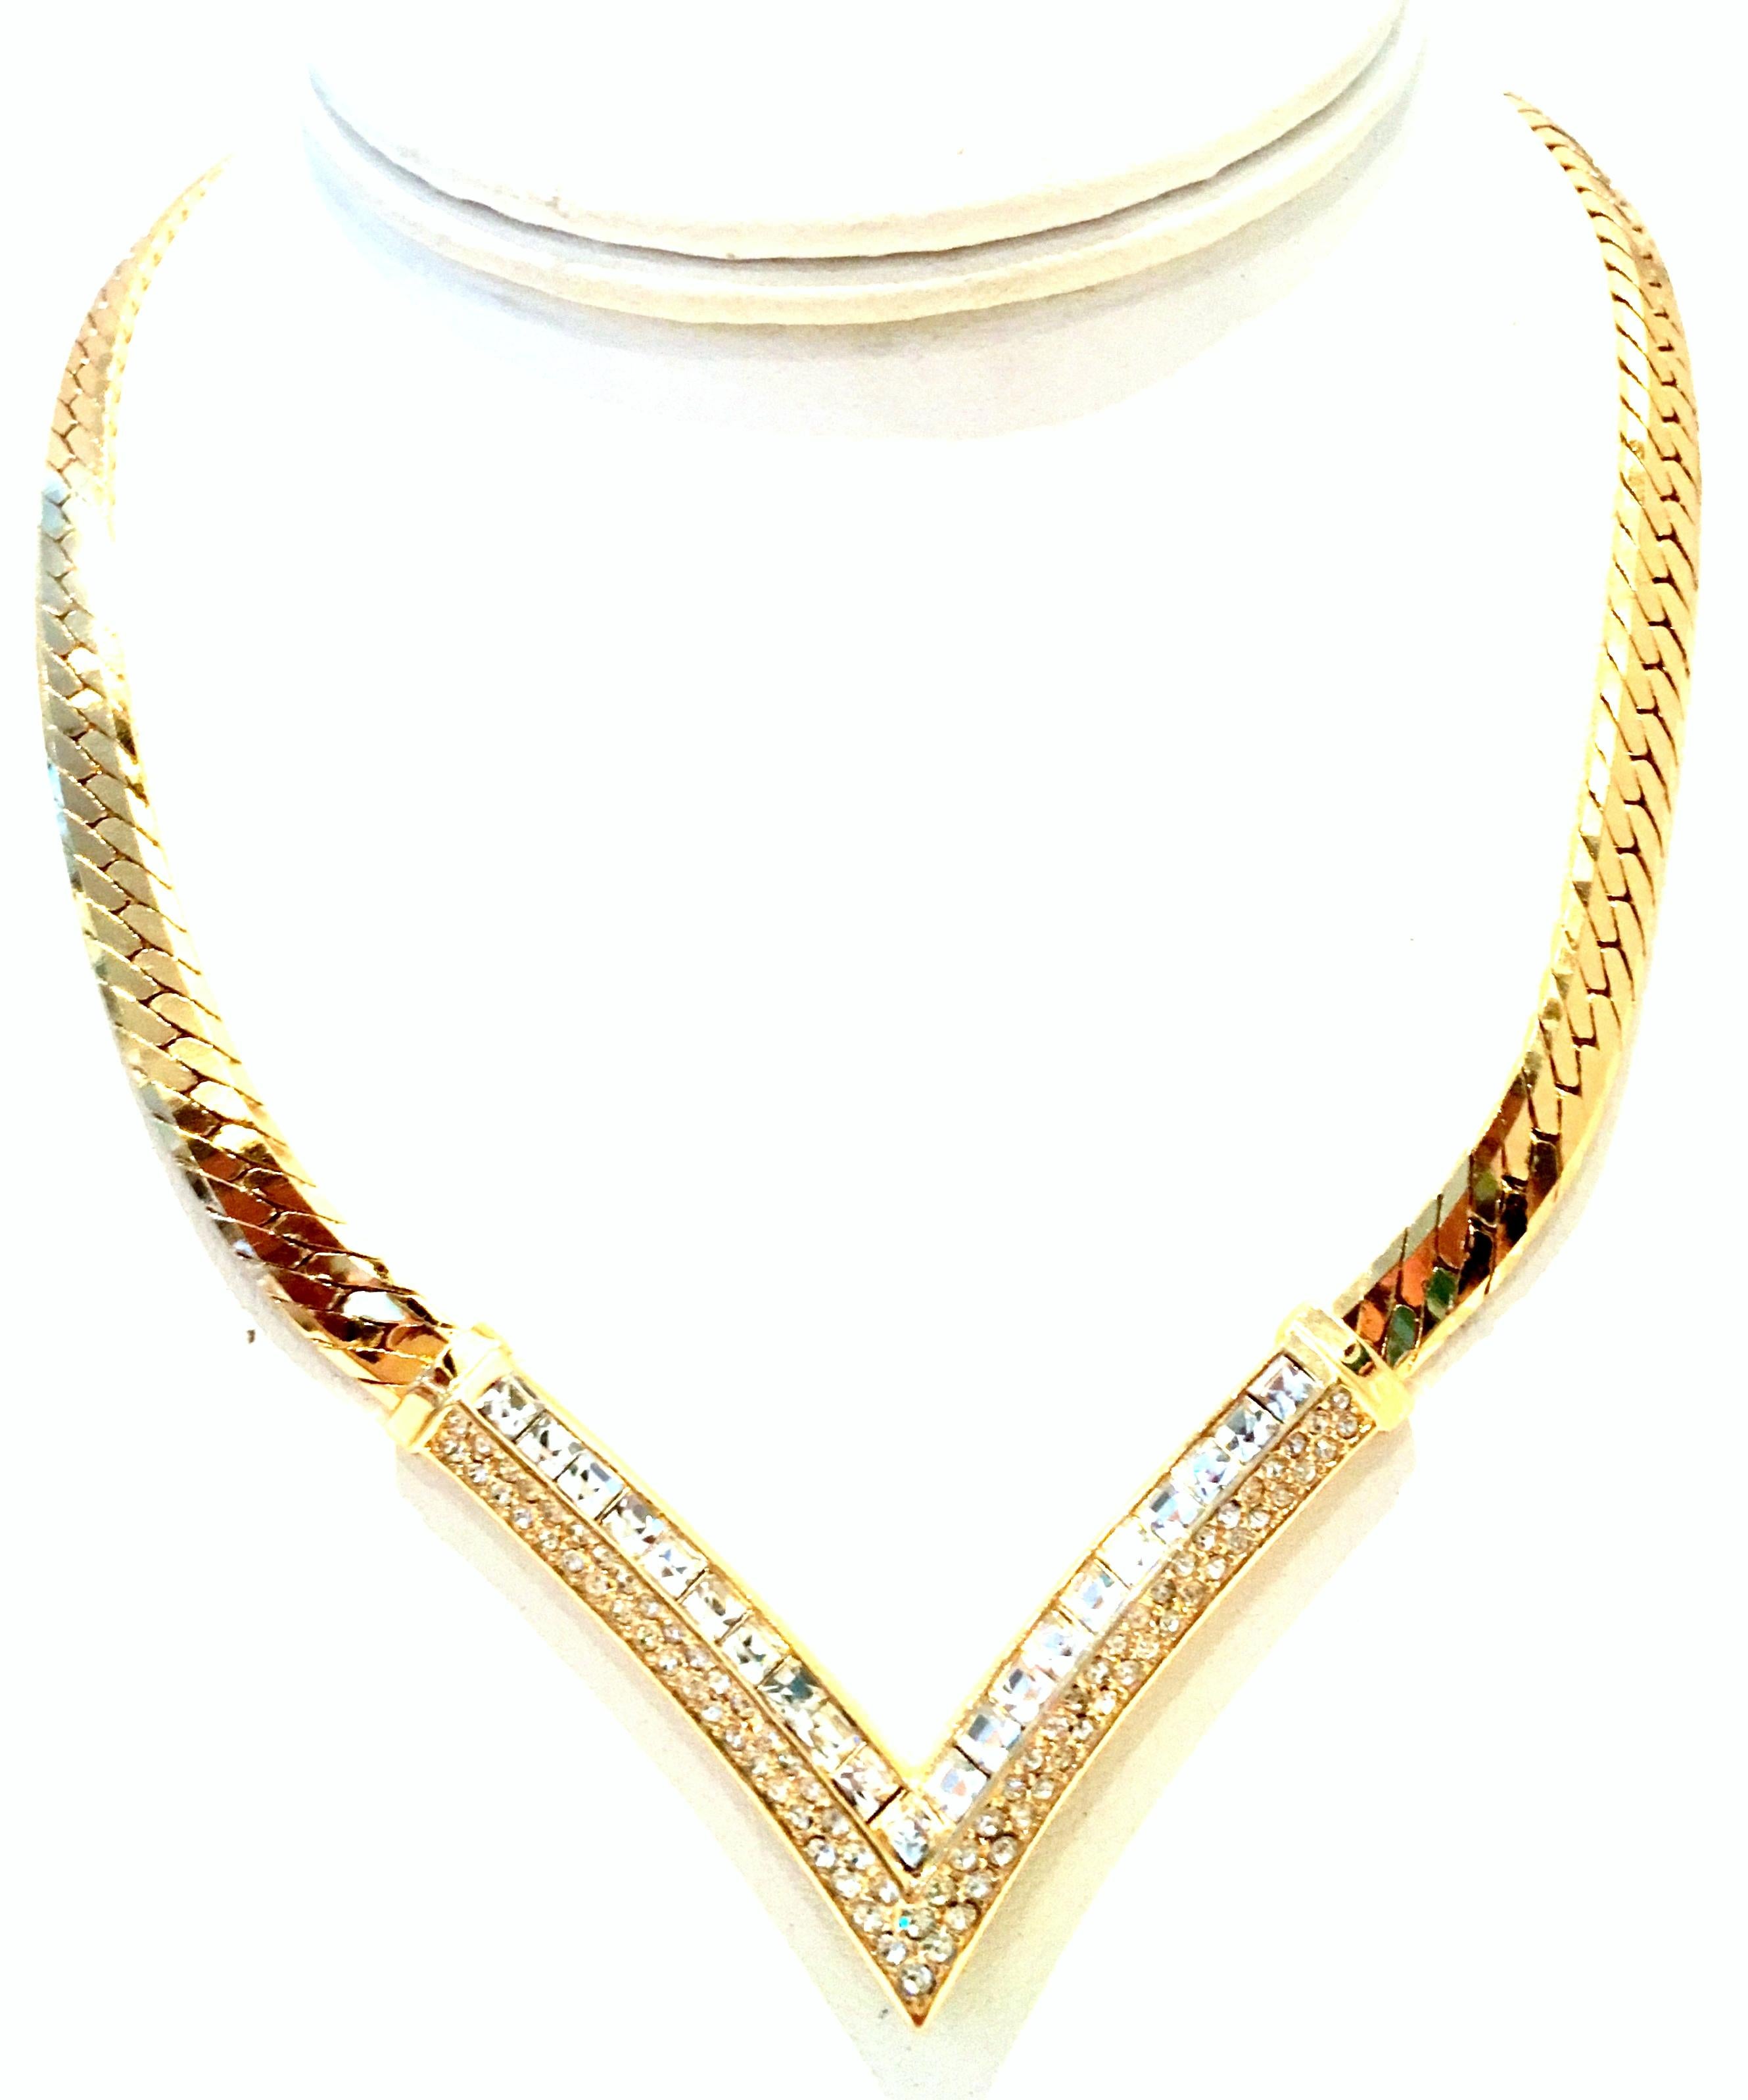 dior necklace price